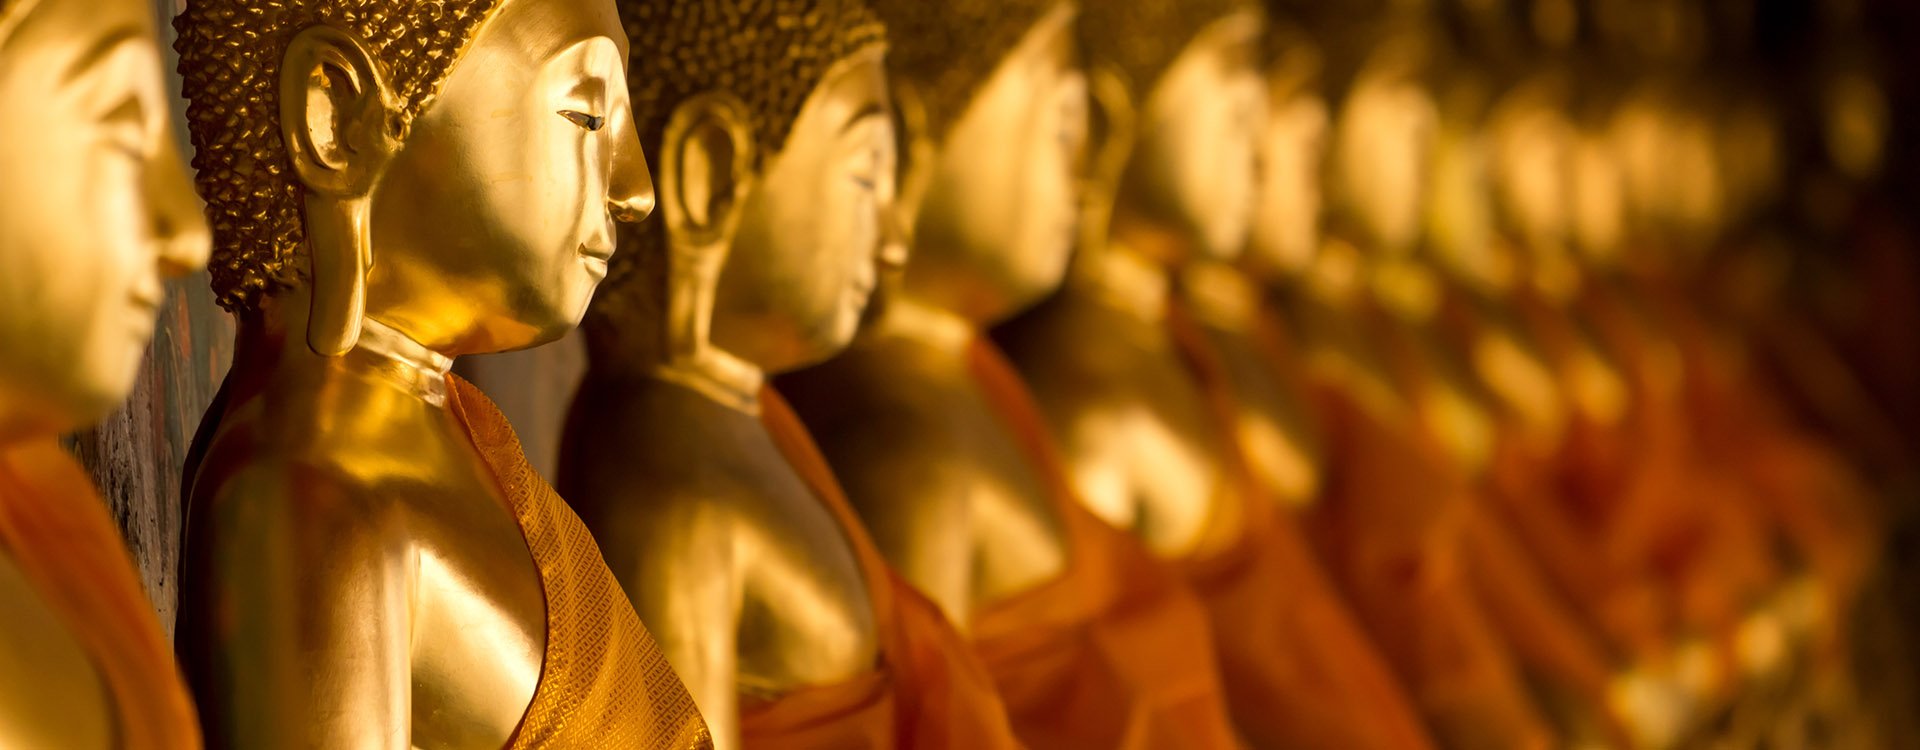 Buddha statues with orange robes in a row at Wat Arun, Bangkok Thailand